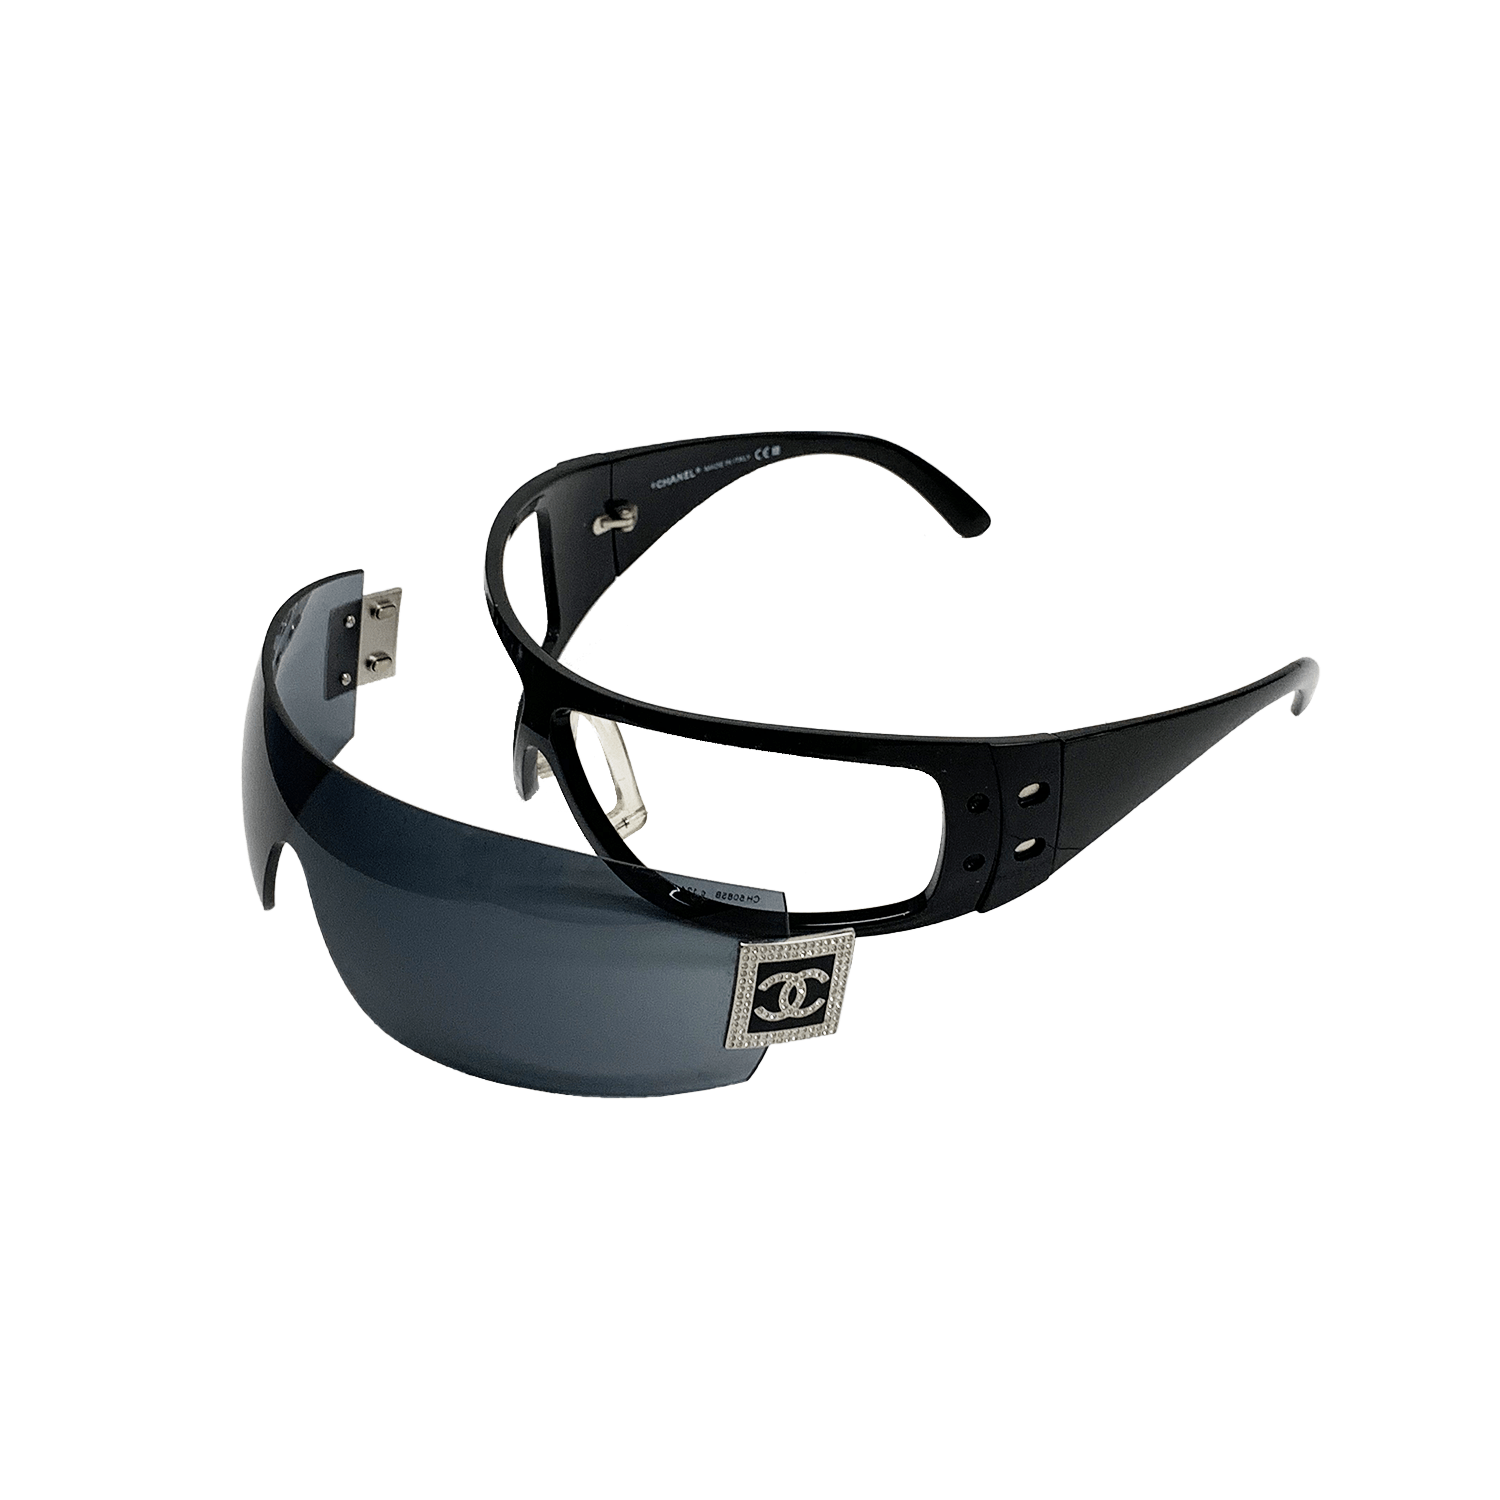 Karl Lagerfeld CHANEL 5810 Wrap Magnetic Mask SKI Sunglasses